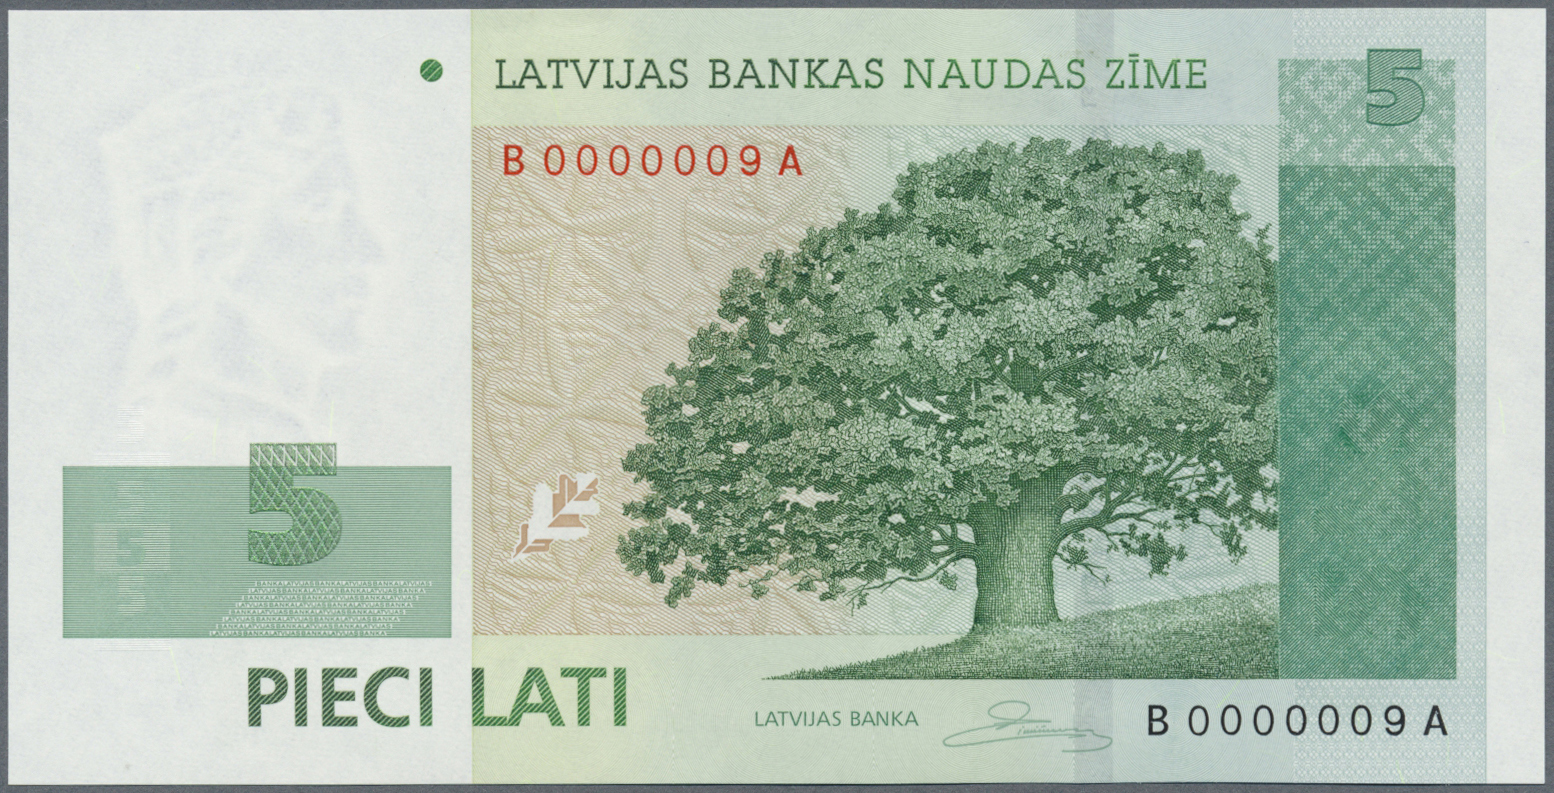 01545 Latvia / Lettland: 5 Lati 2009 P. 53c, With Very Low Serial # B0000009A, Sign. Rimsevics, In Crisp Original Condit - Latvia